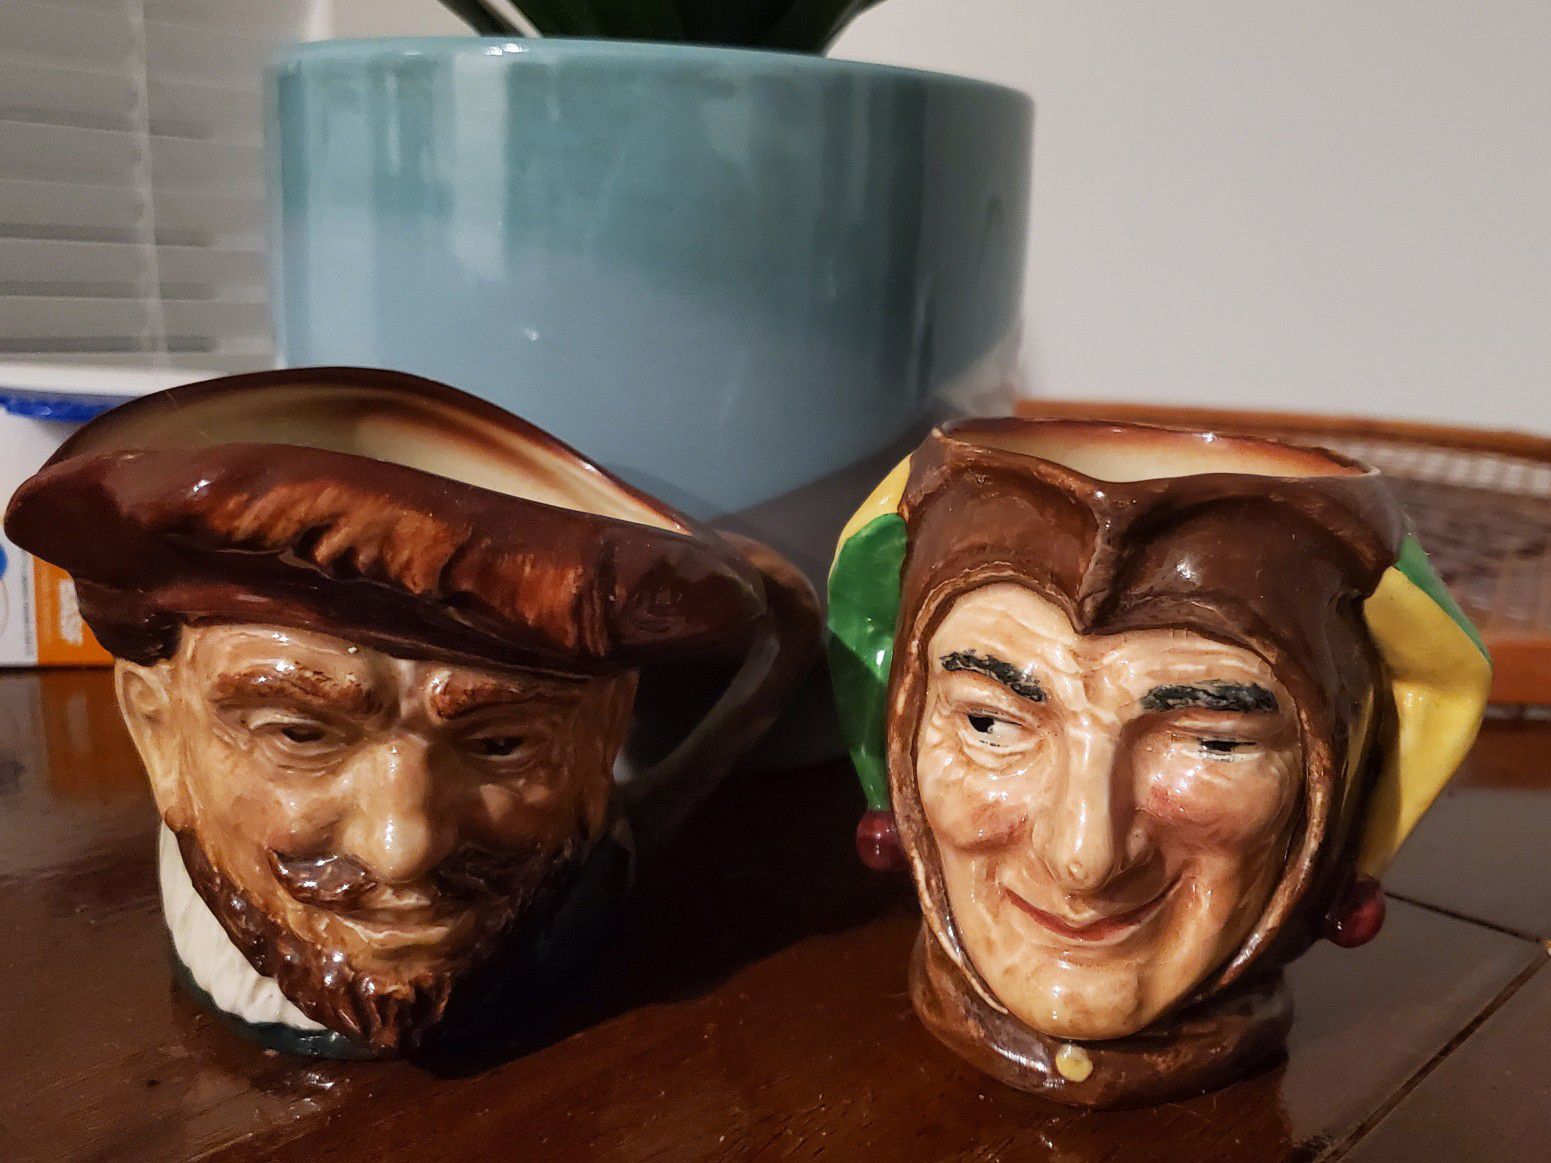 Royal doulton England made mugs